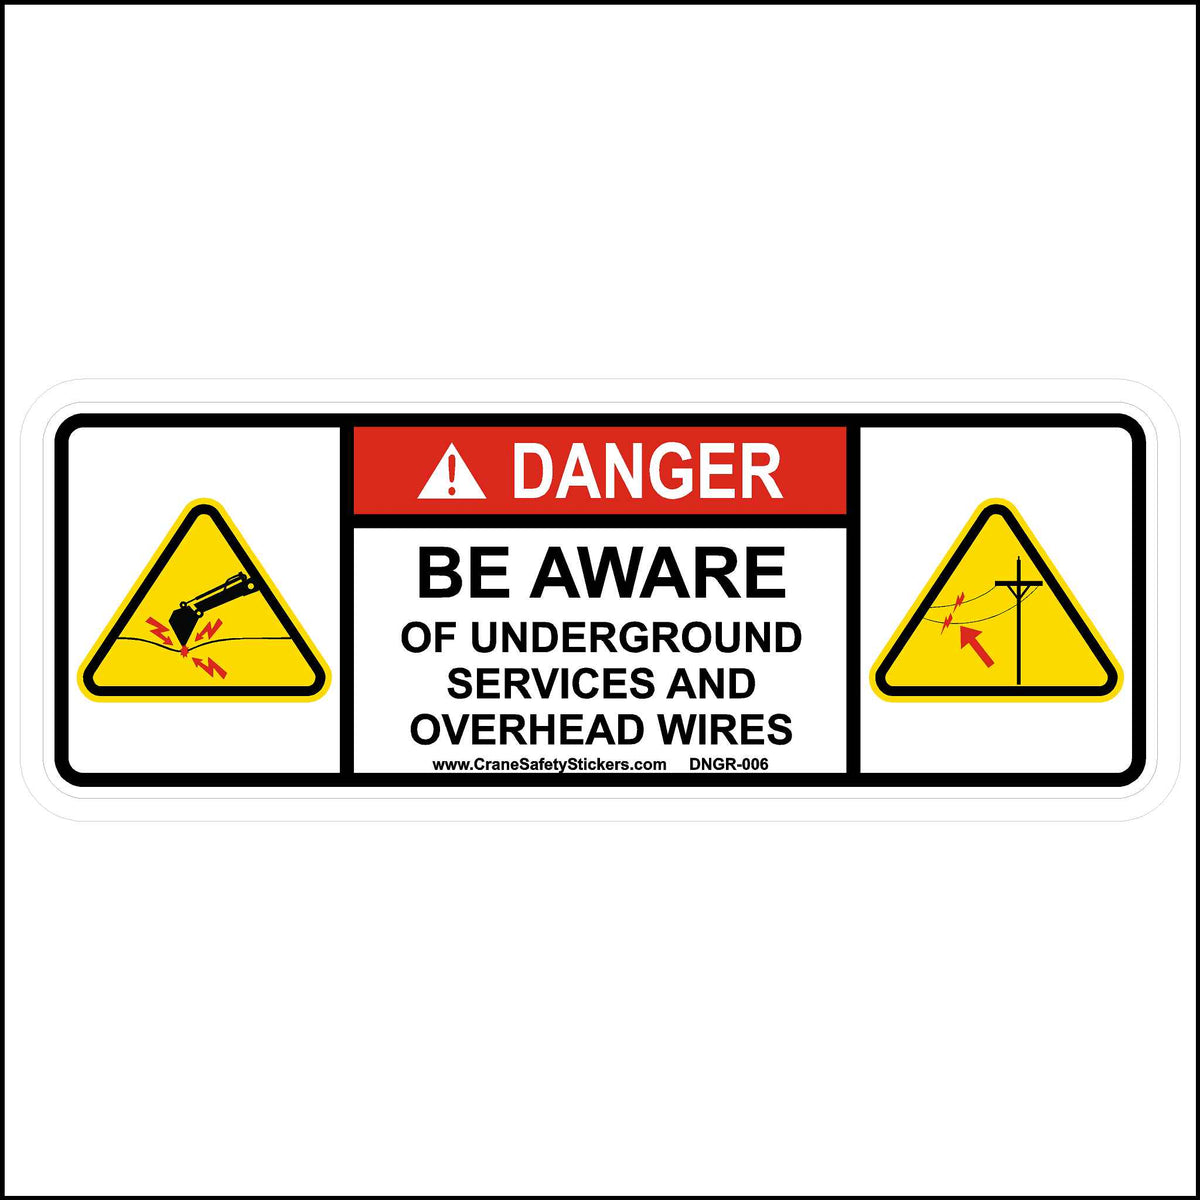 DANGER Be Aware Of Overhead Lines and Underground Utilities Sticker.